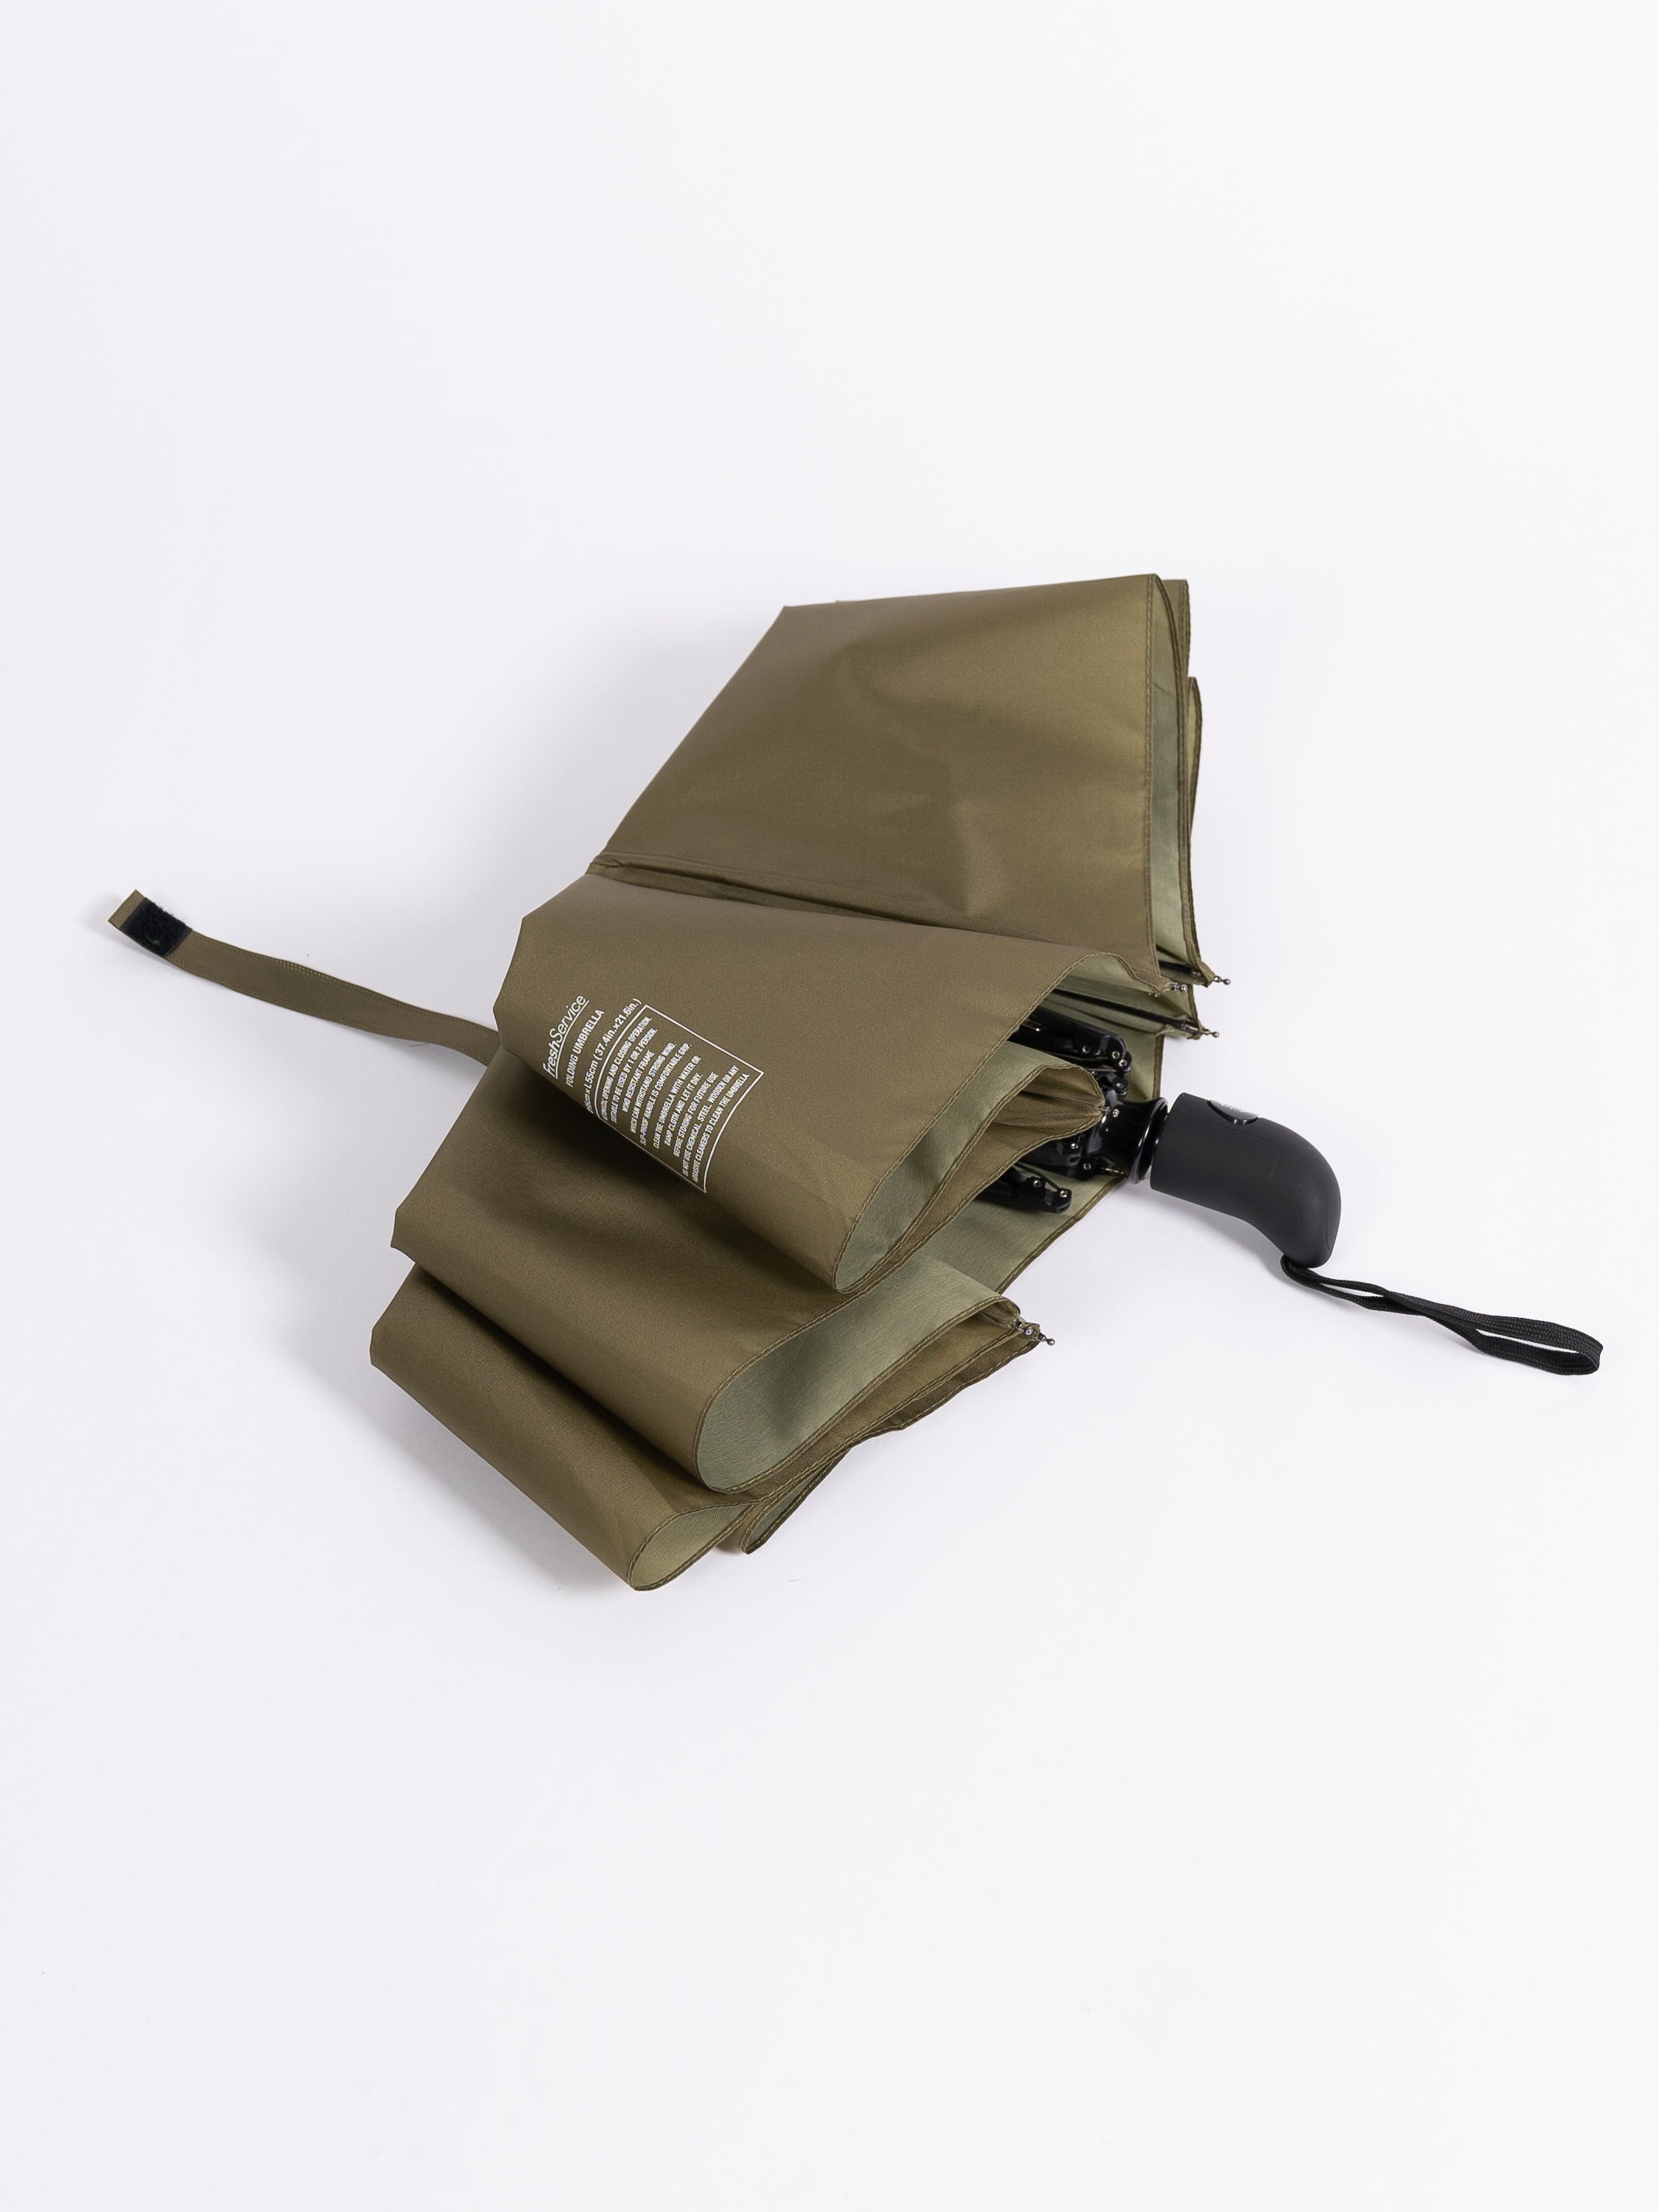 FreshService Folding Umbrella (Khaki)